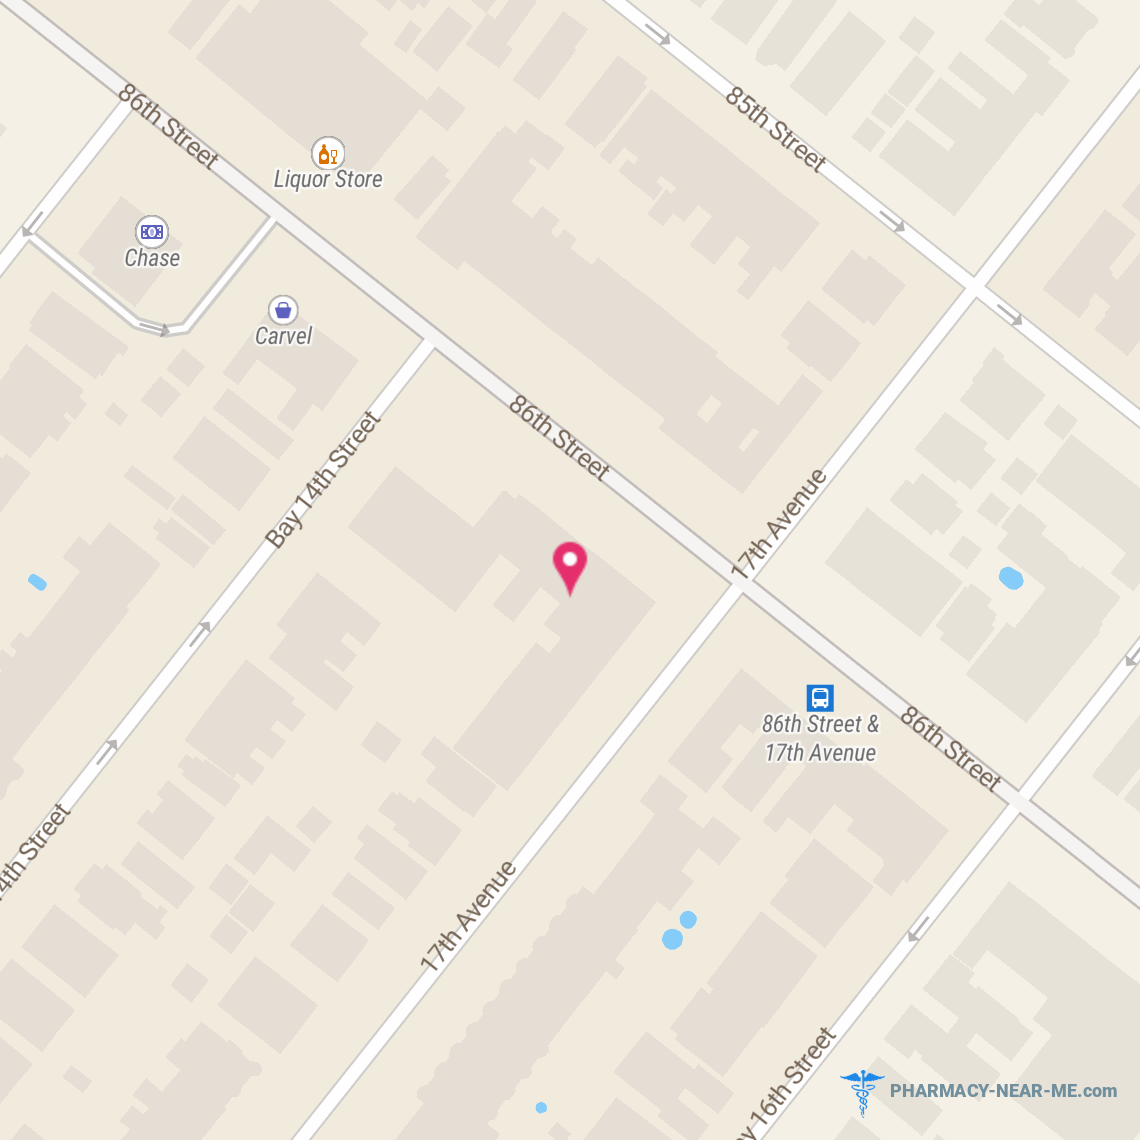 OHANA PHARMACY INC. - Pharmacy Hours, Phone, Reviews & Information: 1690 86th Street, Brooklyn, New York 11214, United States